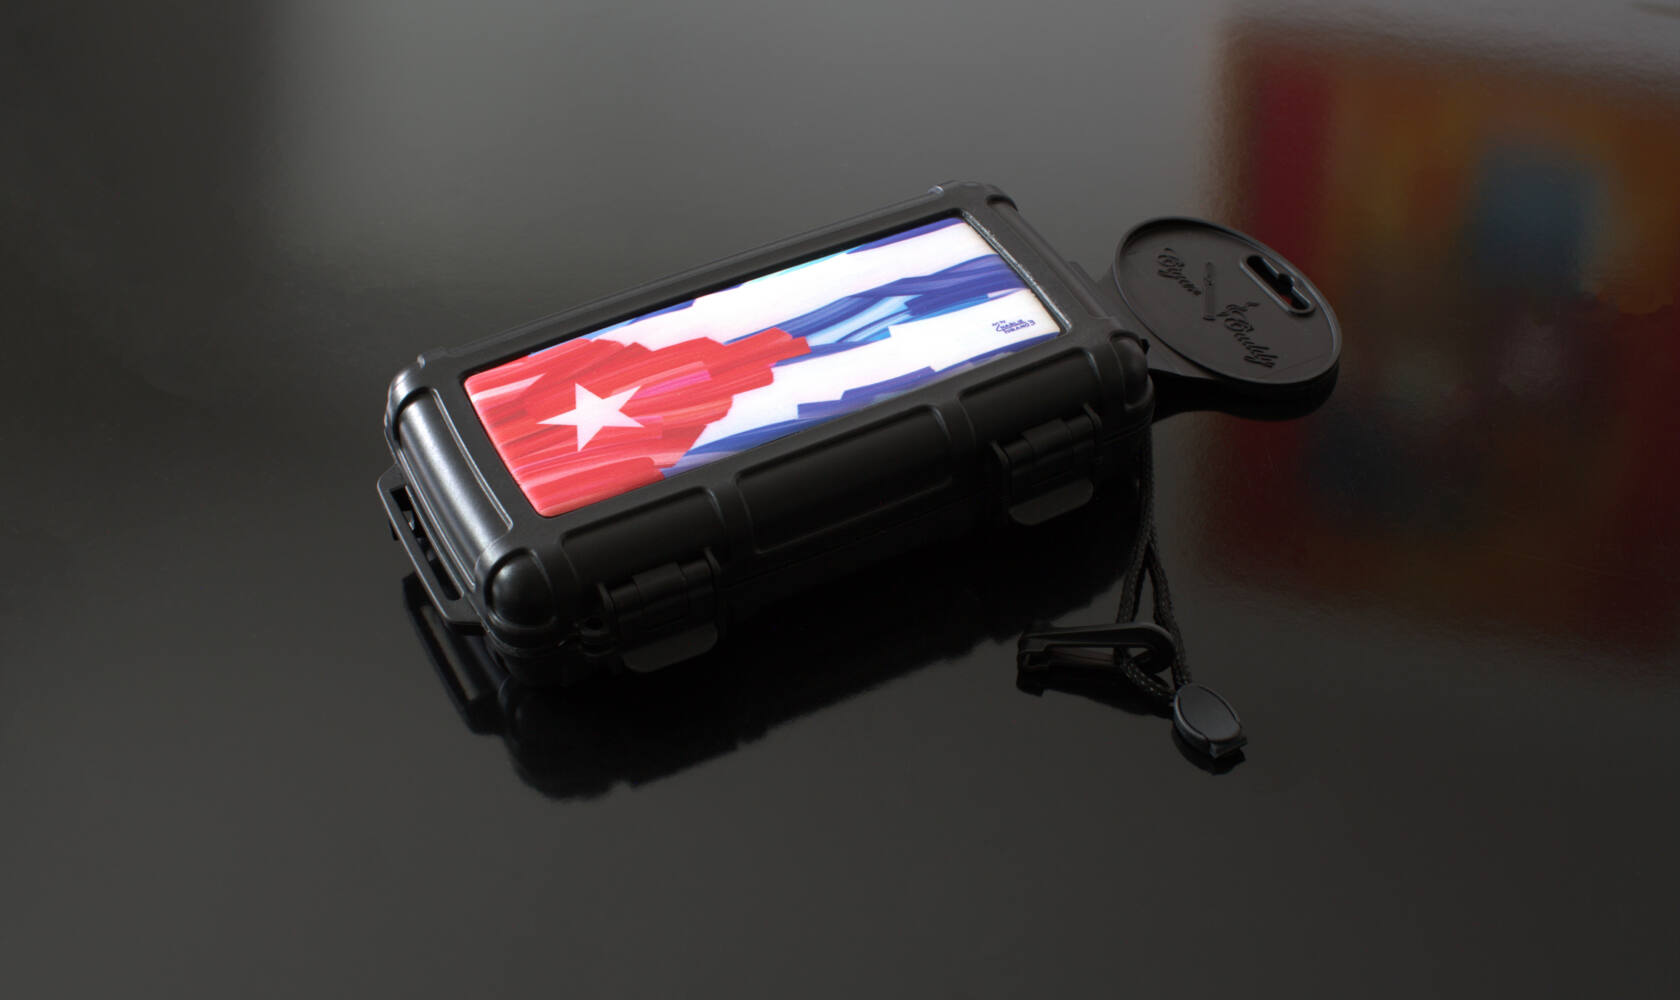 Cigar Caddy Travel Humidor Case Cuban Flag Design